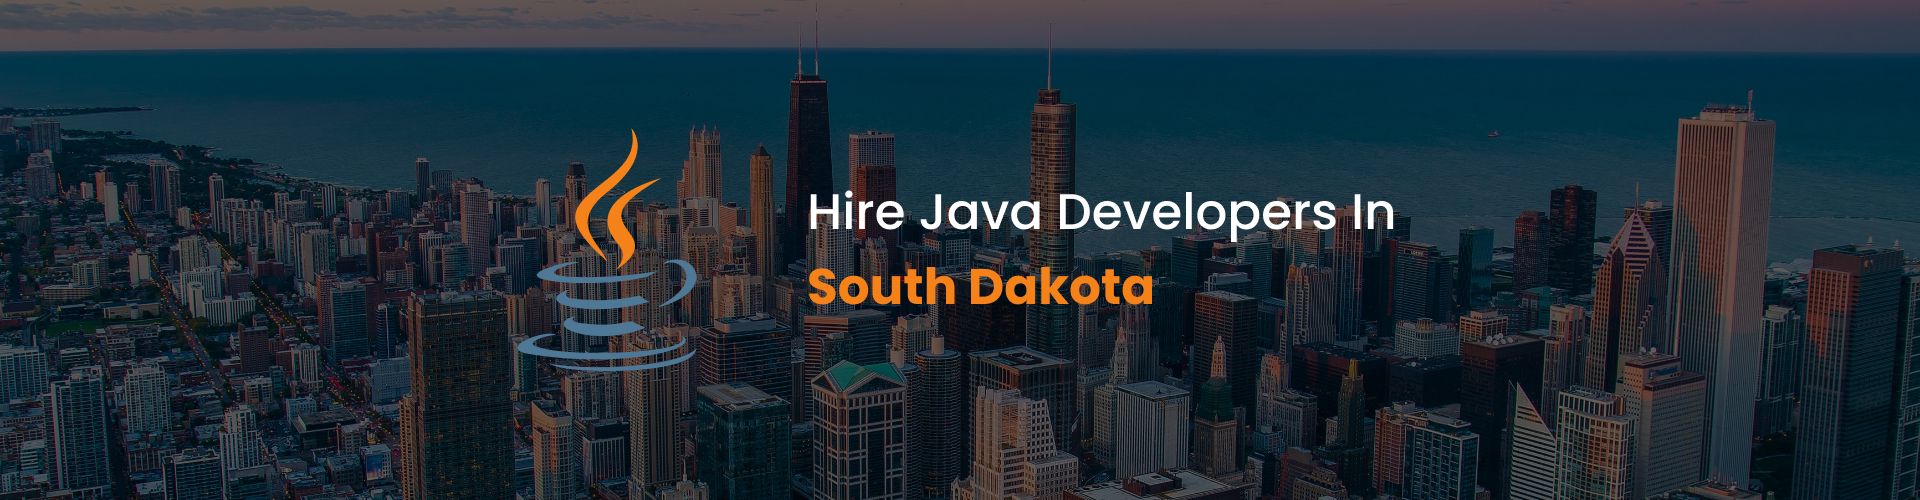 hire java developers in south dakota